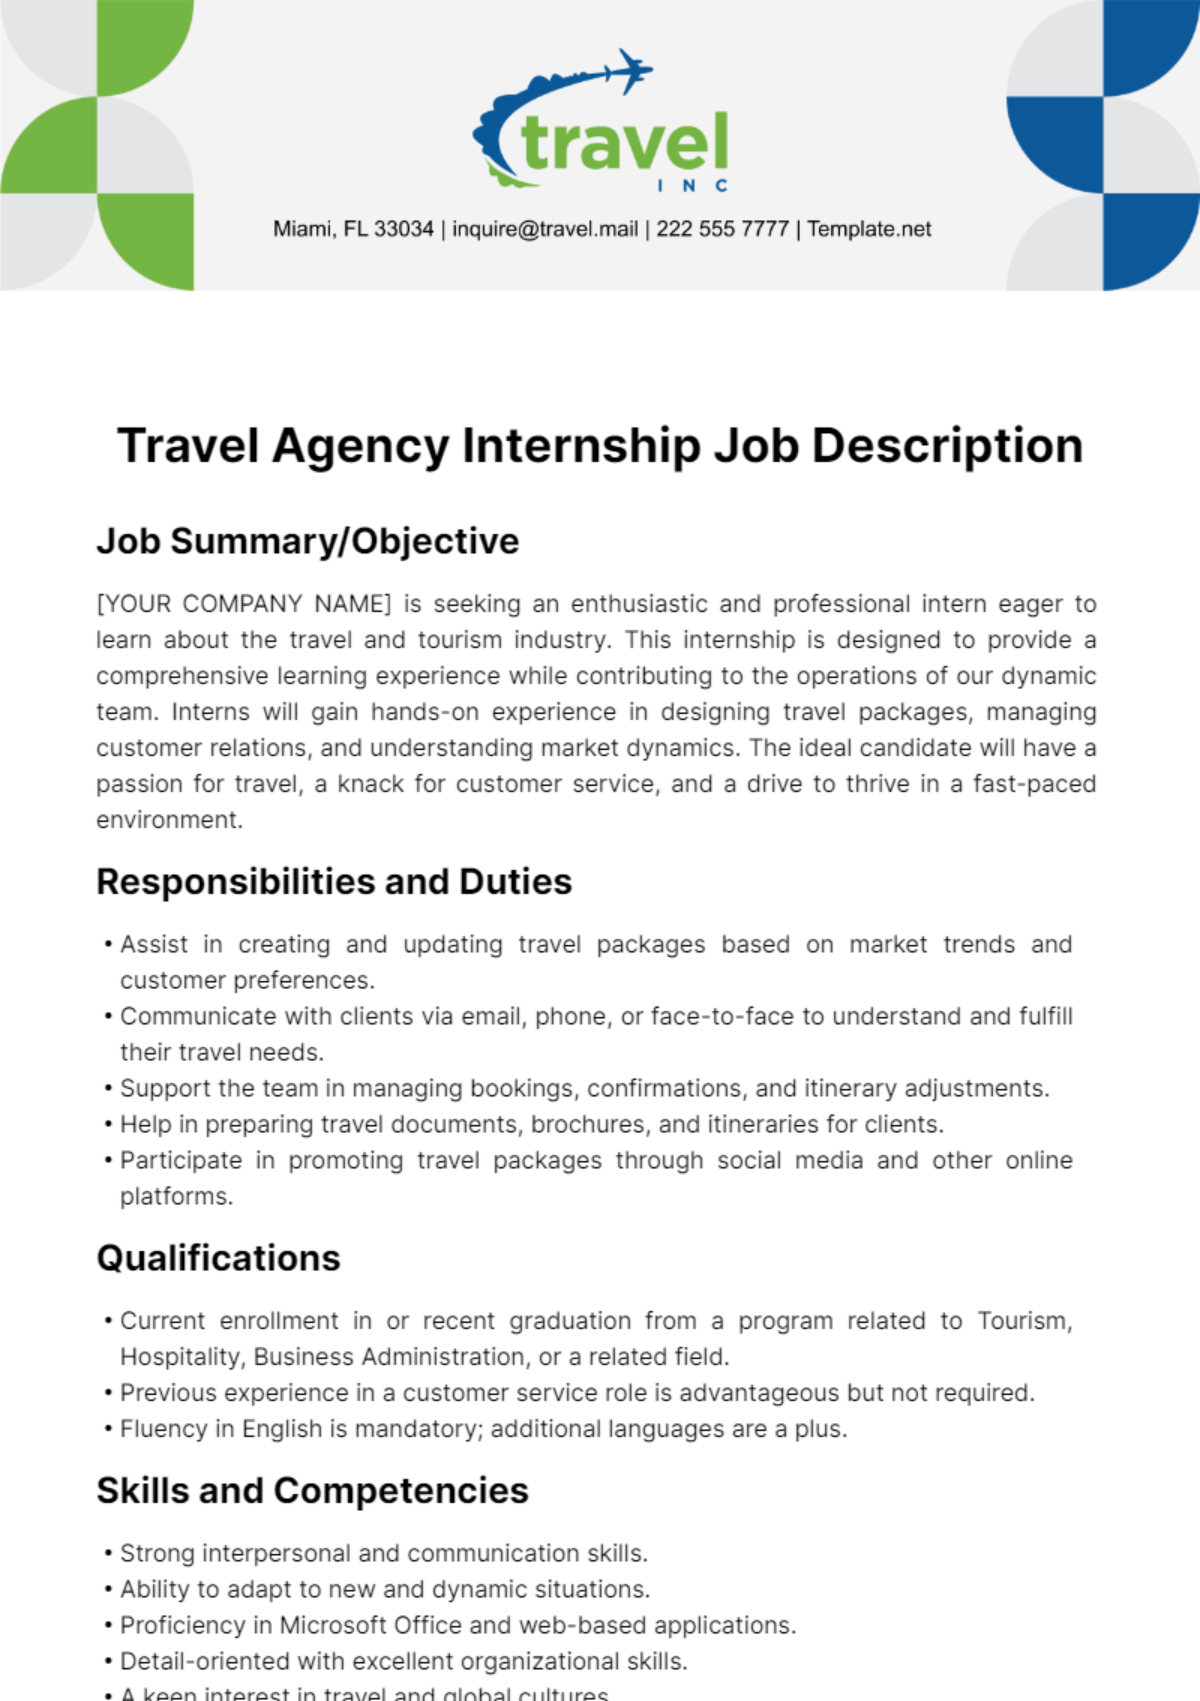 Travel Agency Internship Job Description Template